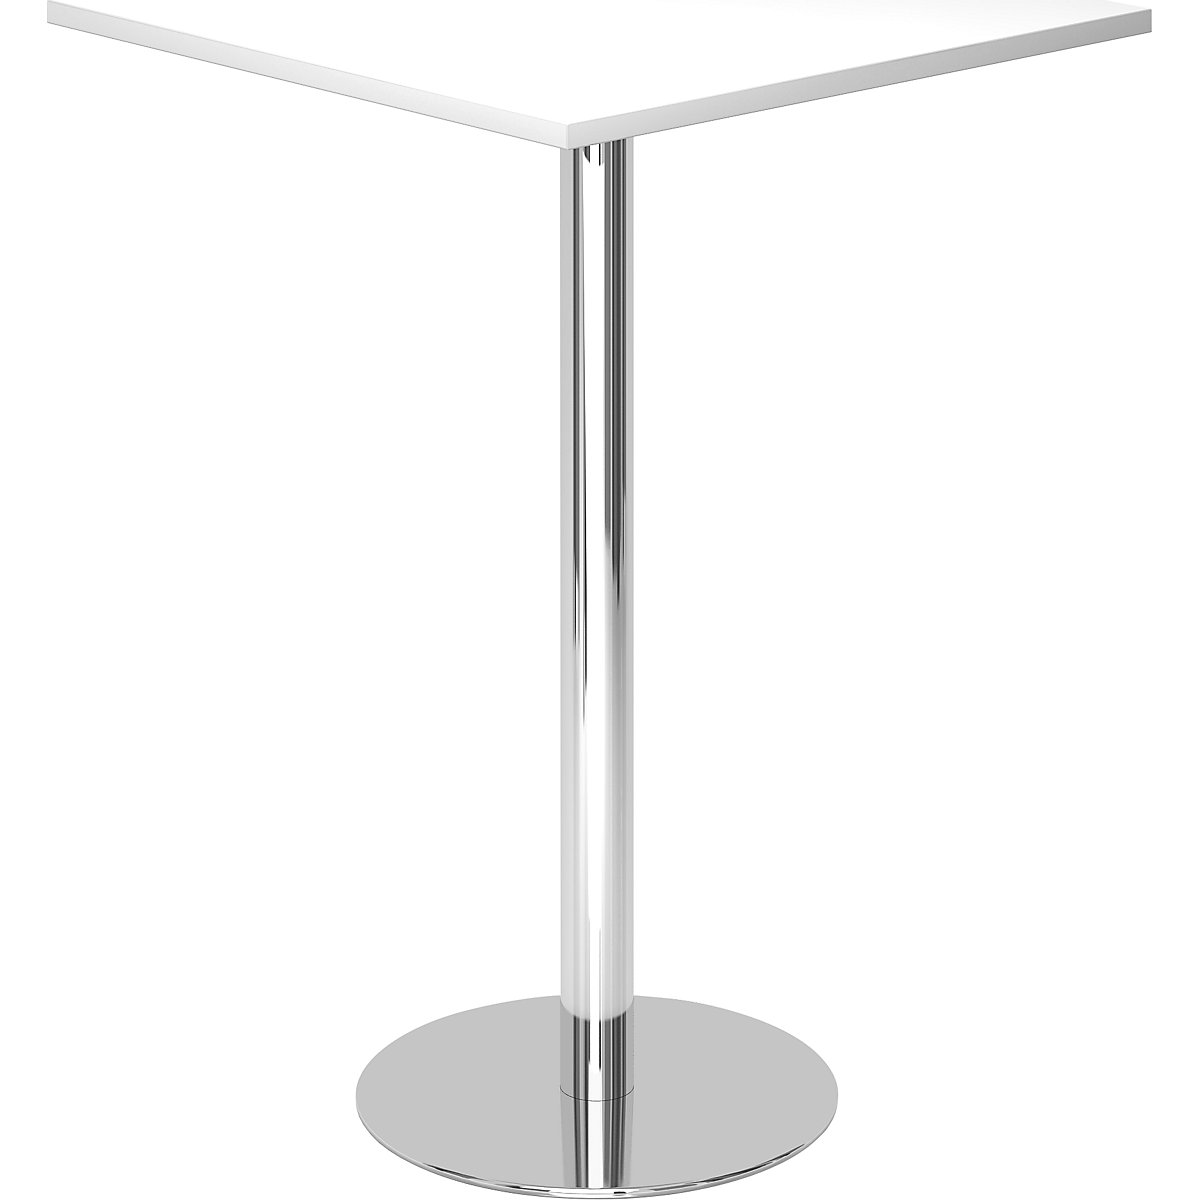 Barový stůl, d x š 800 x 800 mm, výška 1116 mm, pochromovaný podstavec, deska bílá